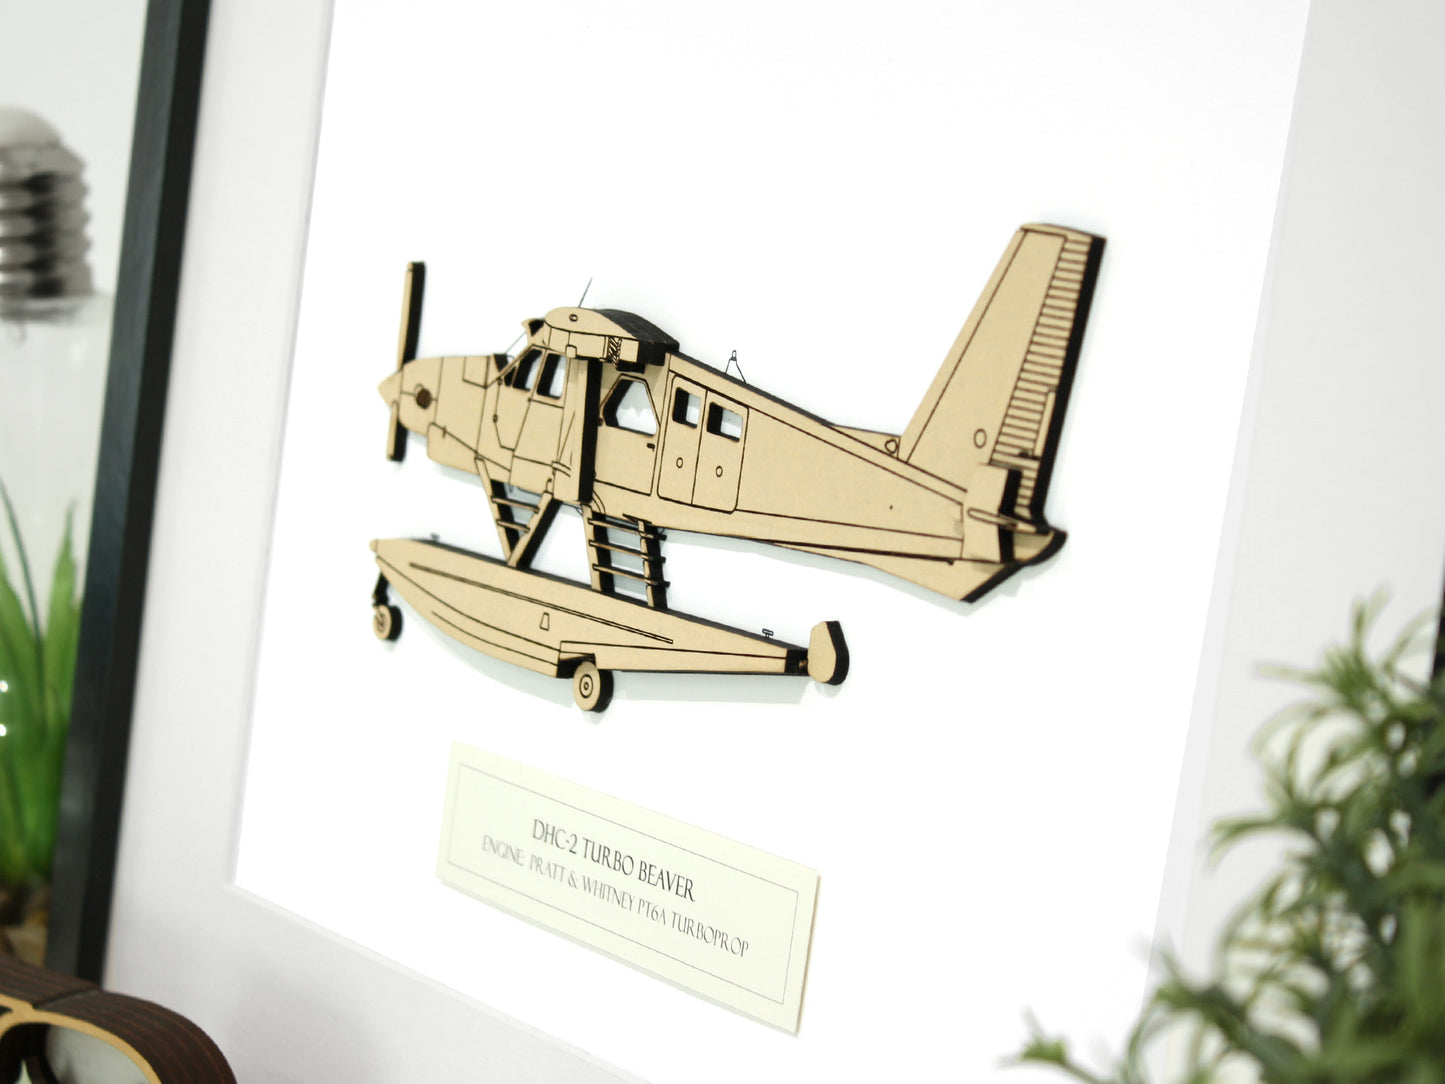 DHC-2 Turbo Beaver pilot gifts